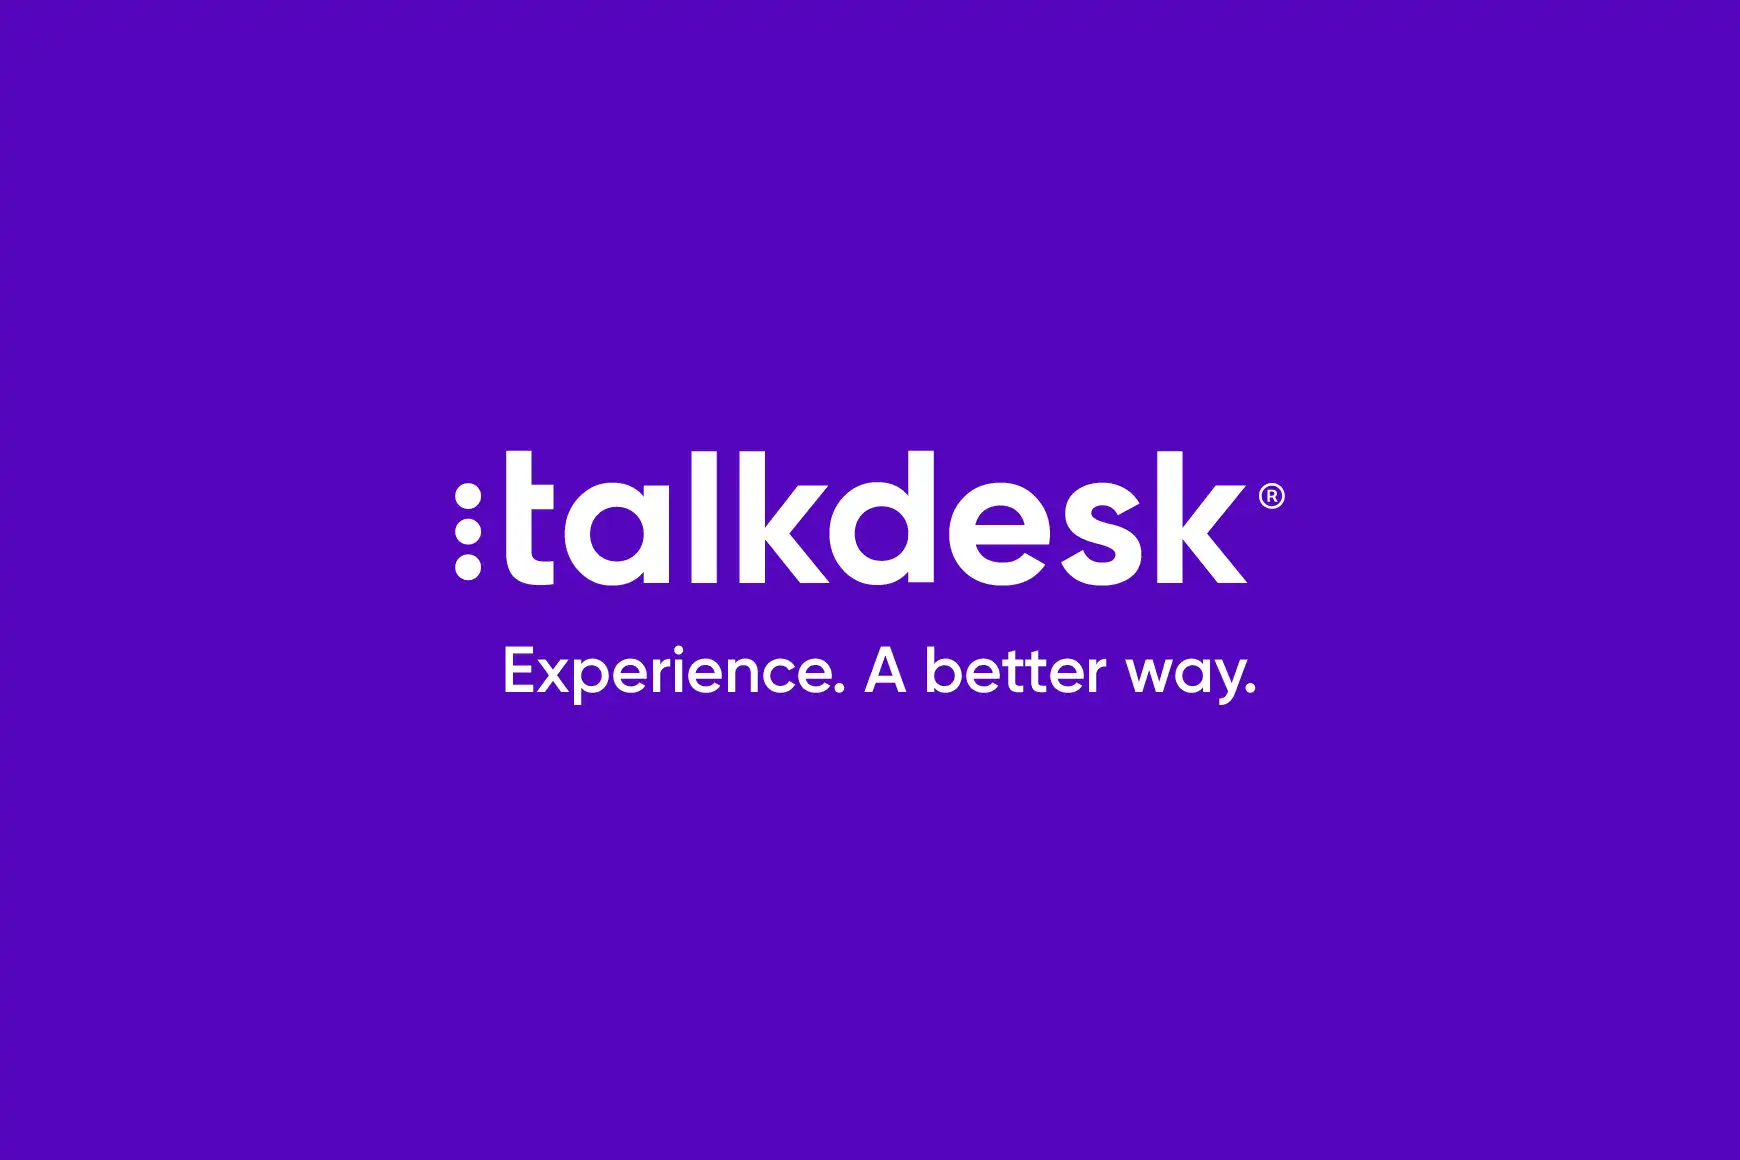 Talkdesk makes history